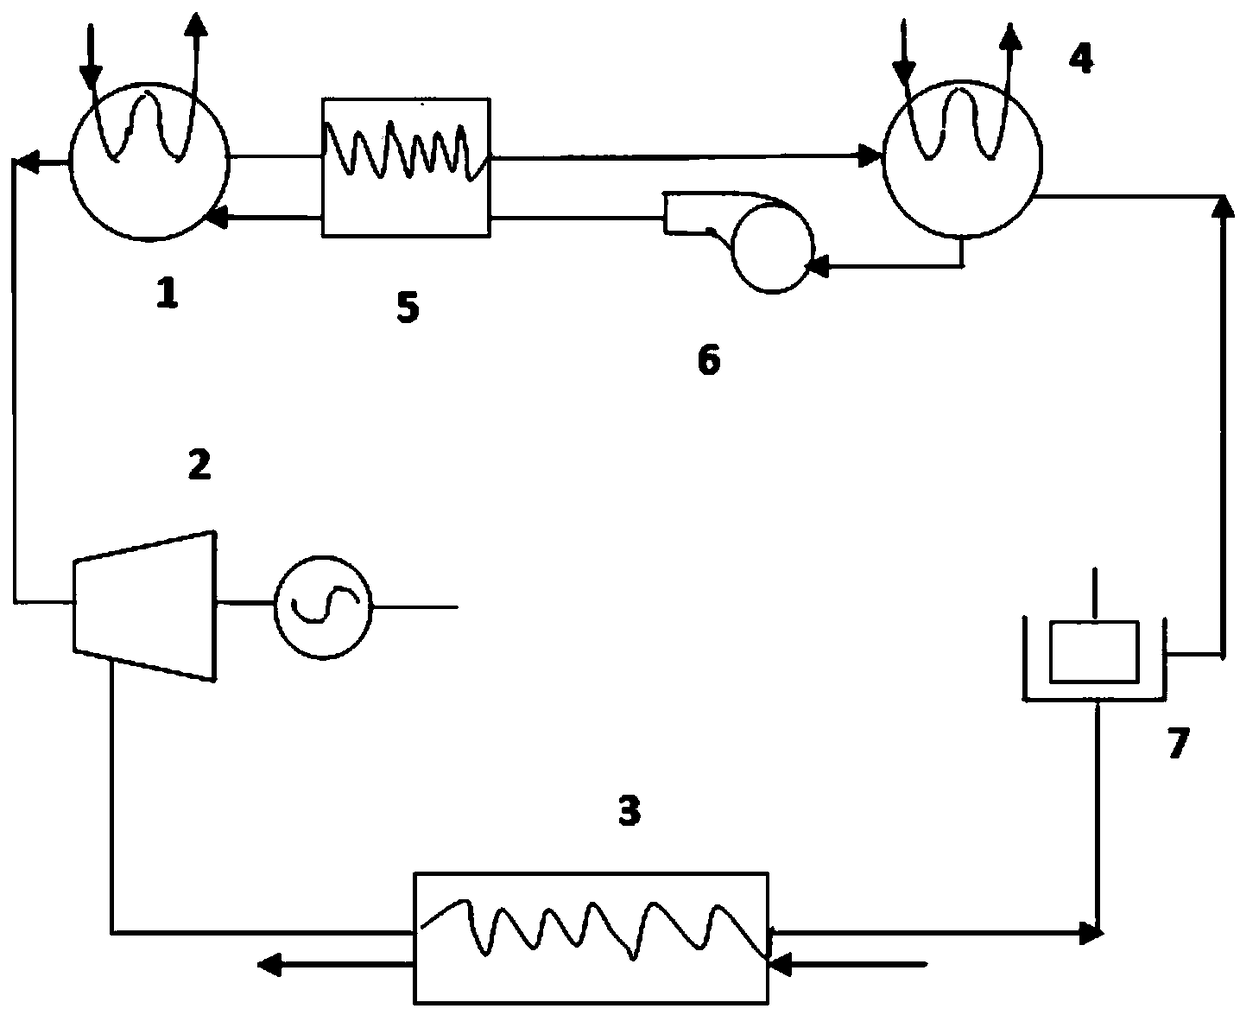 An absorption heat pump refrigeration power cogeneration method